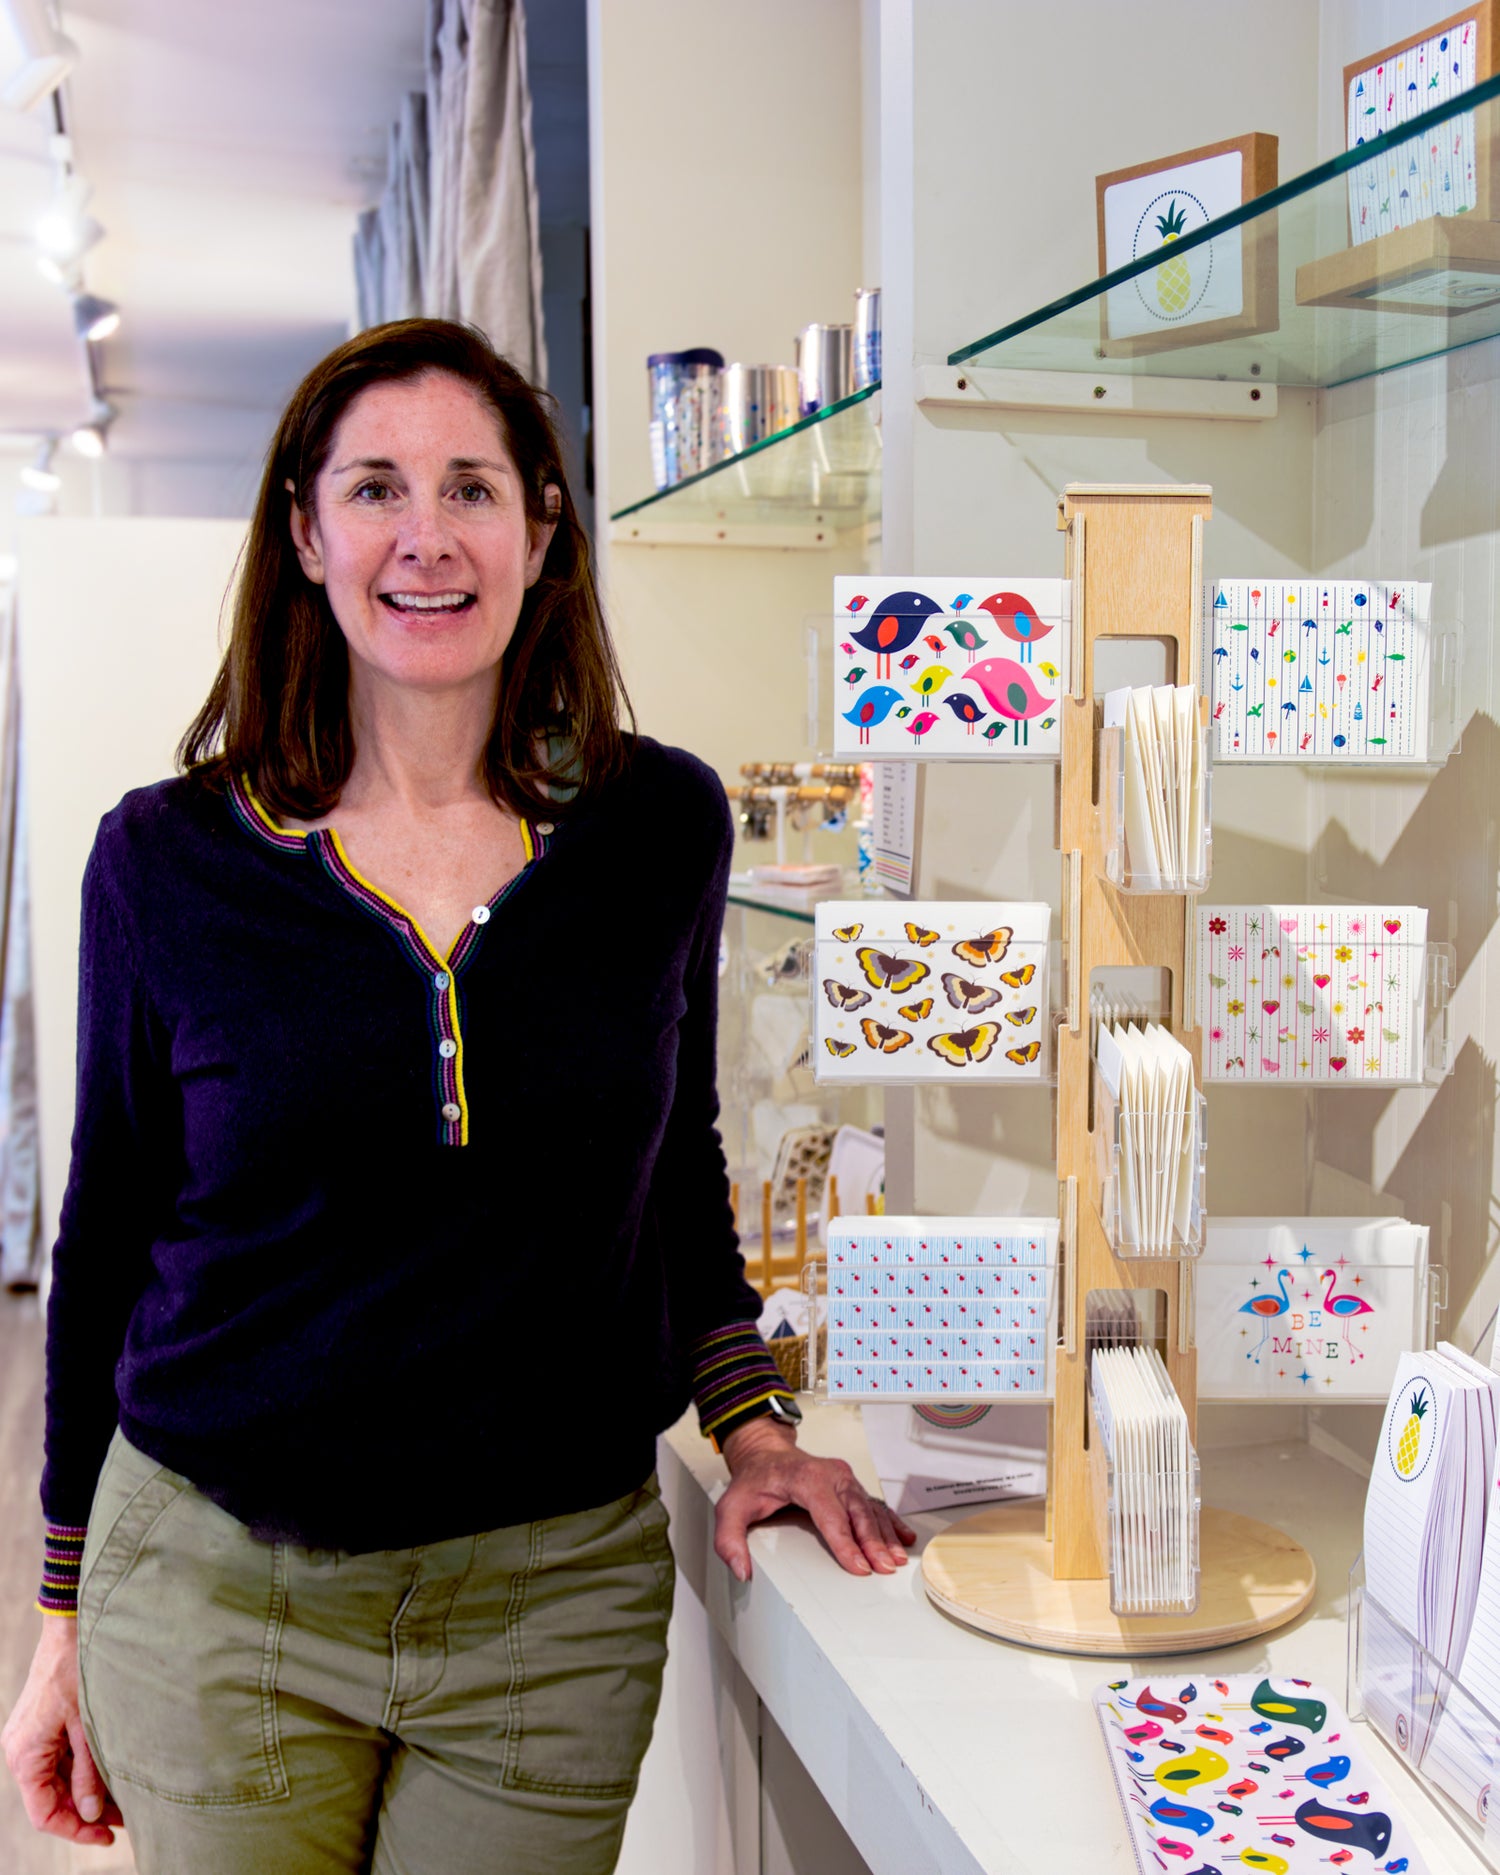 Dana Lynch, owner and illustrator of Blue Kite Press